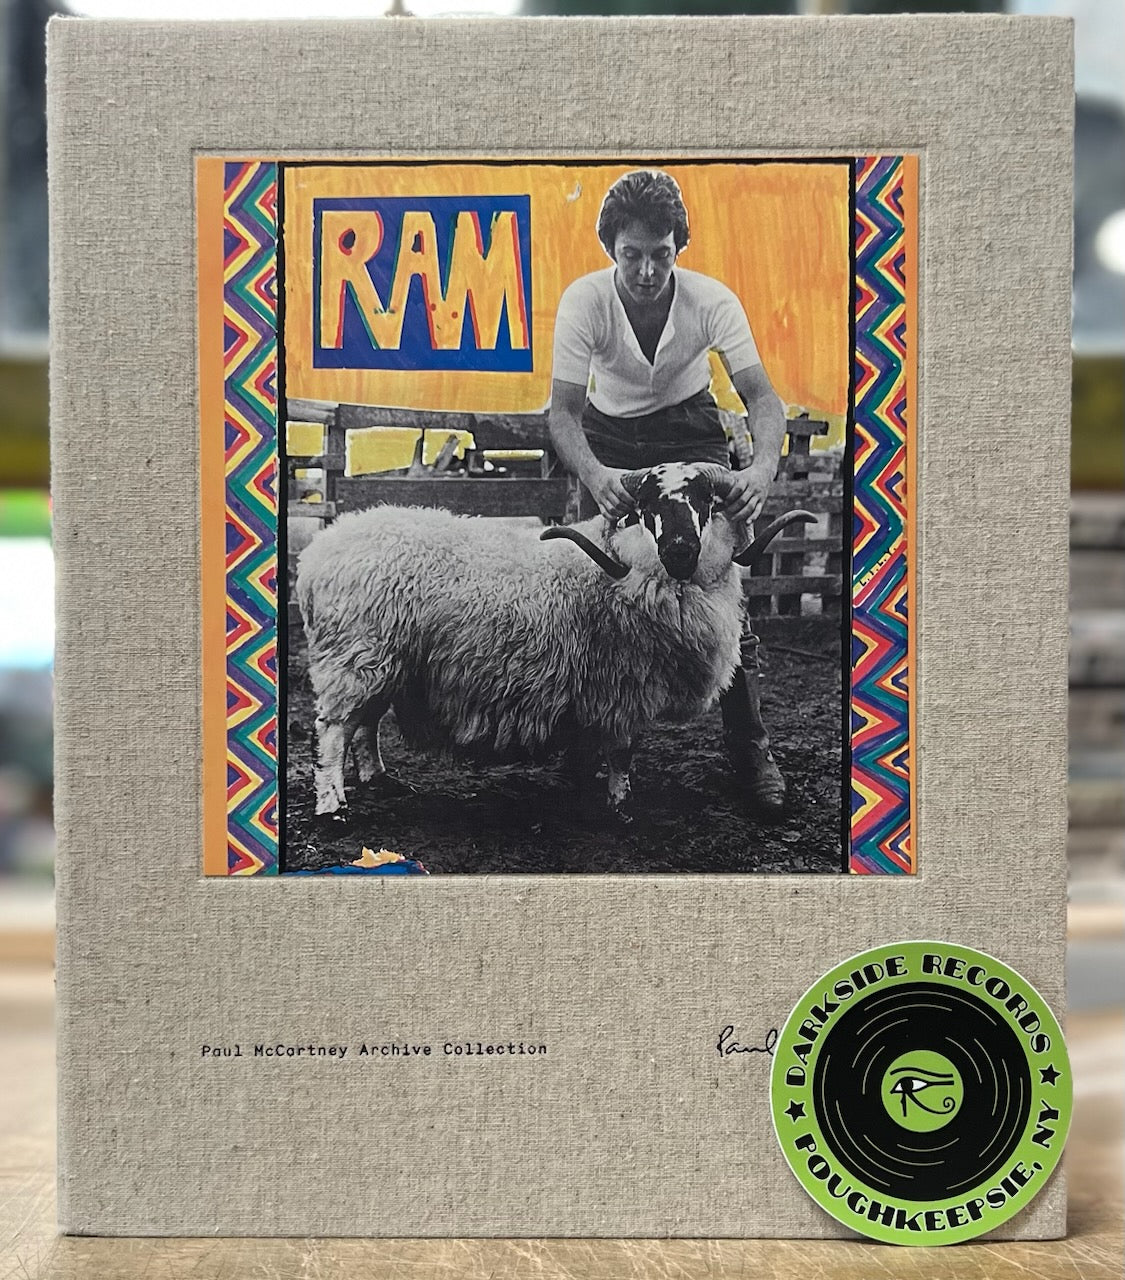 Paul McCartney- Ram (Archive Collection) (Box Set) (Sealed)